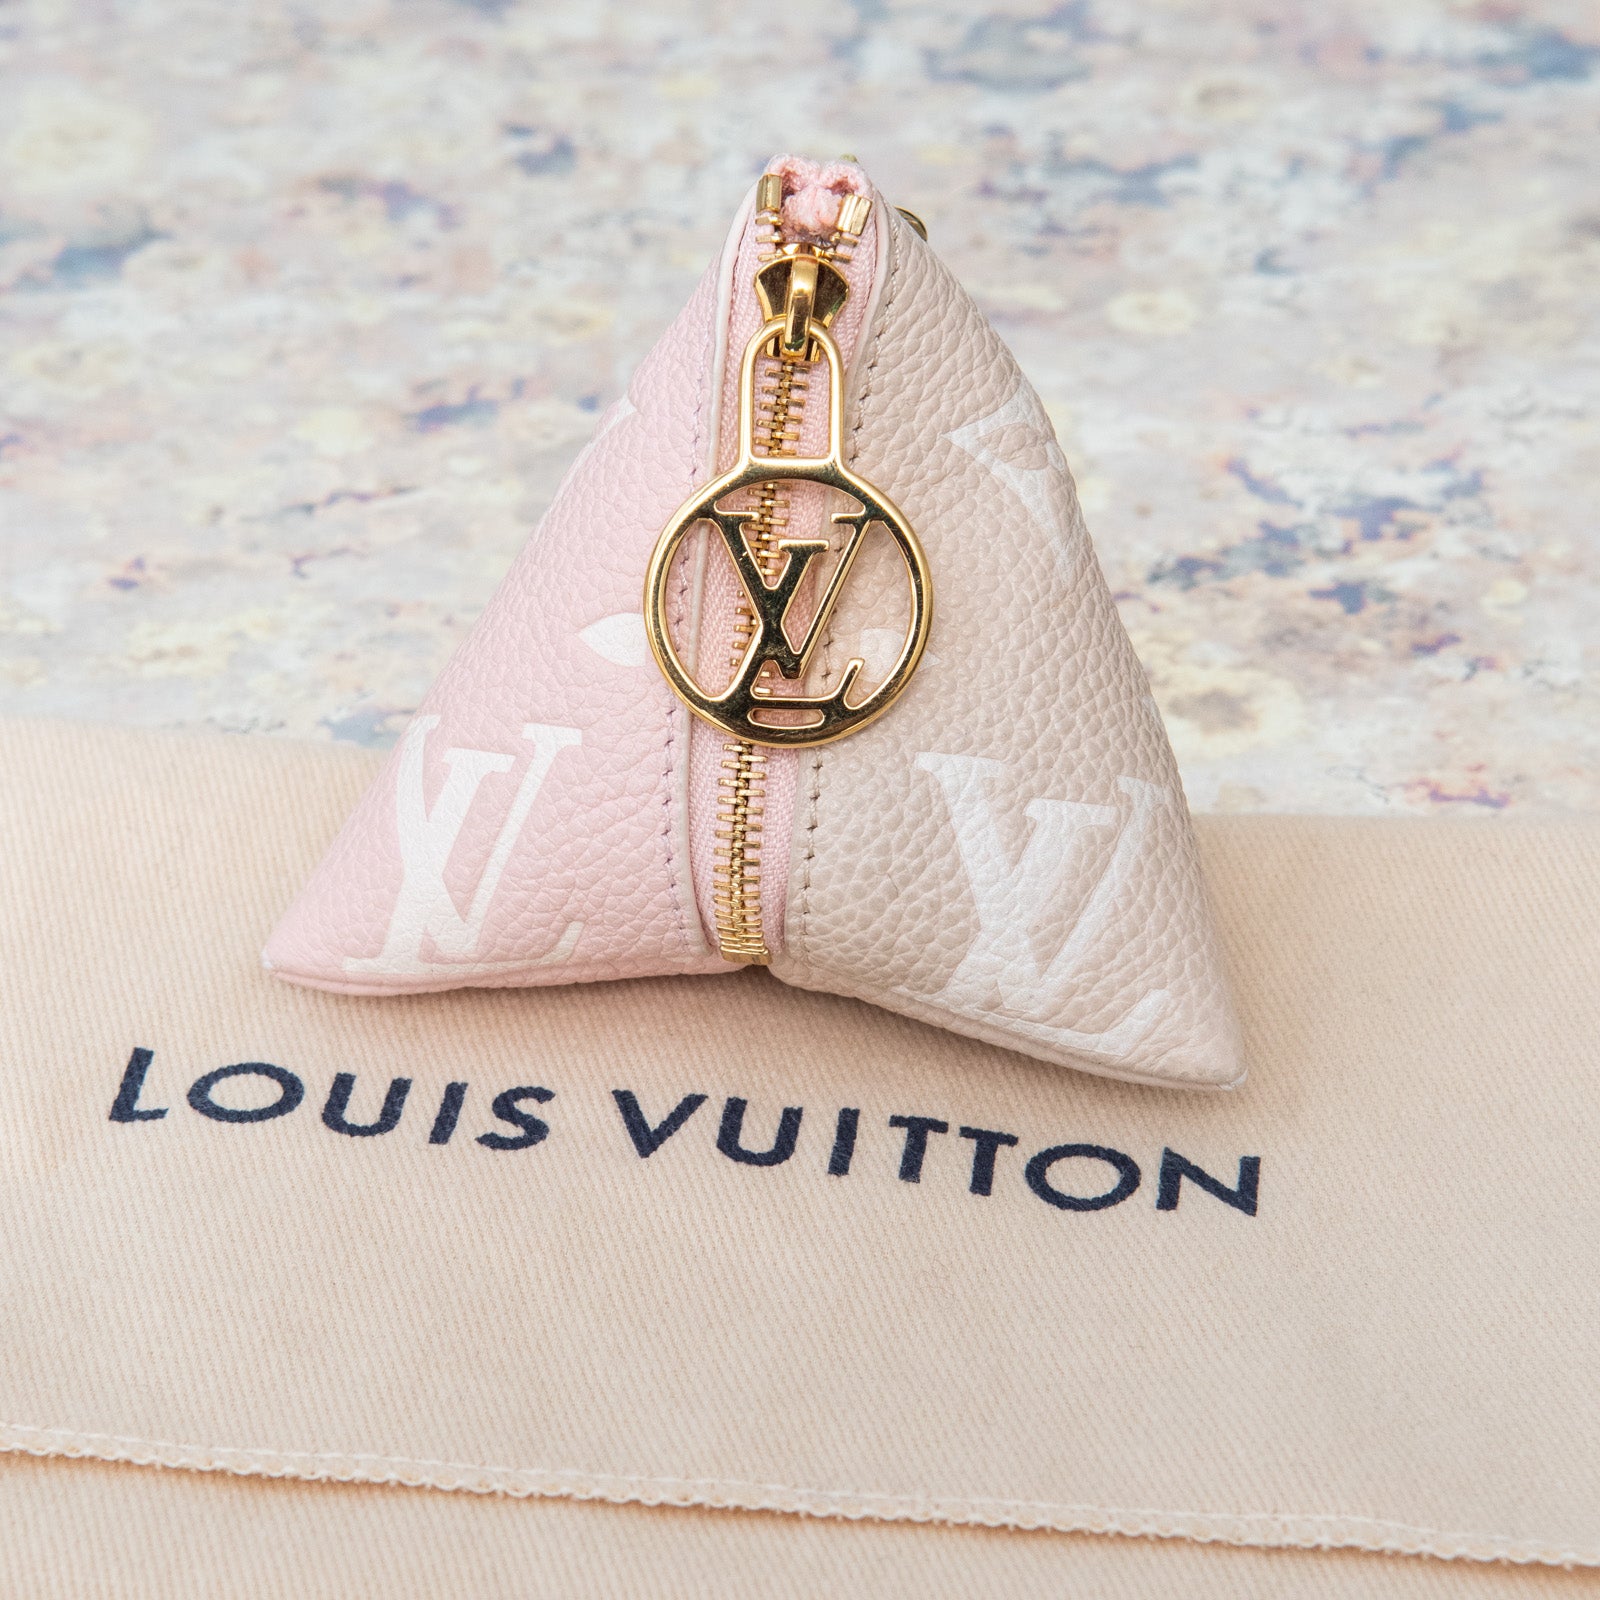 Louis Vuitton Berlingot Bag Charm And Key Holder - EVEYSPRELOVED